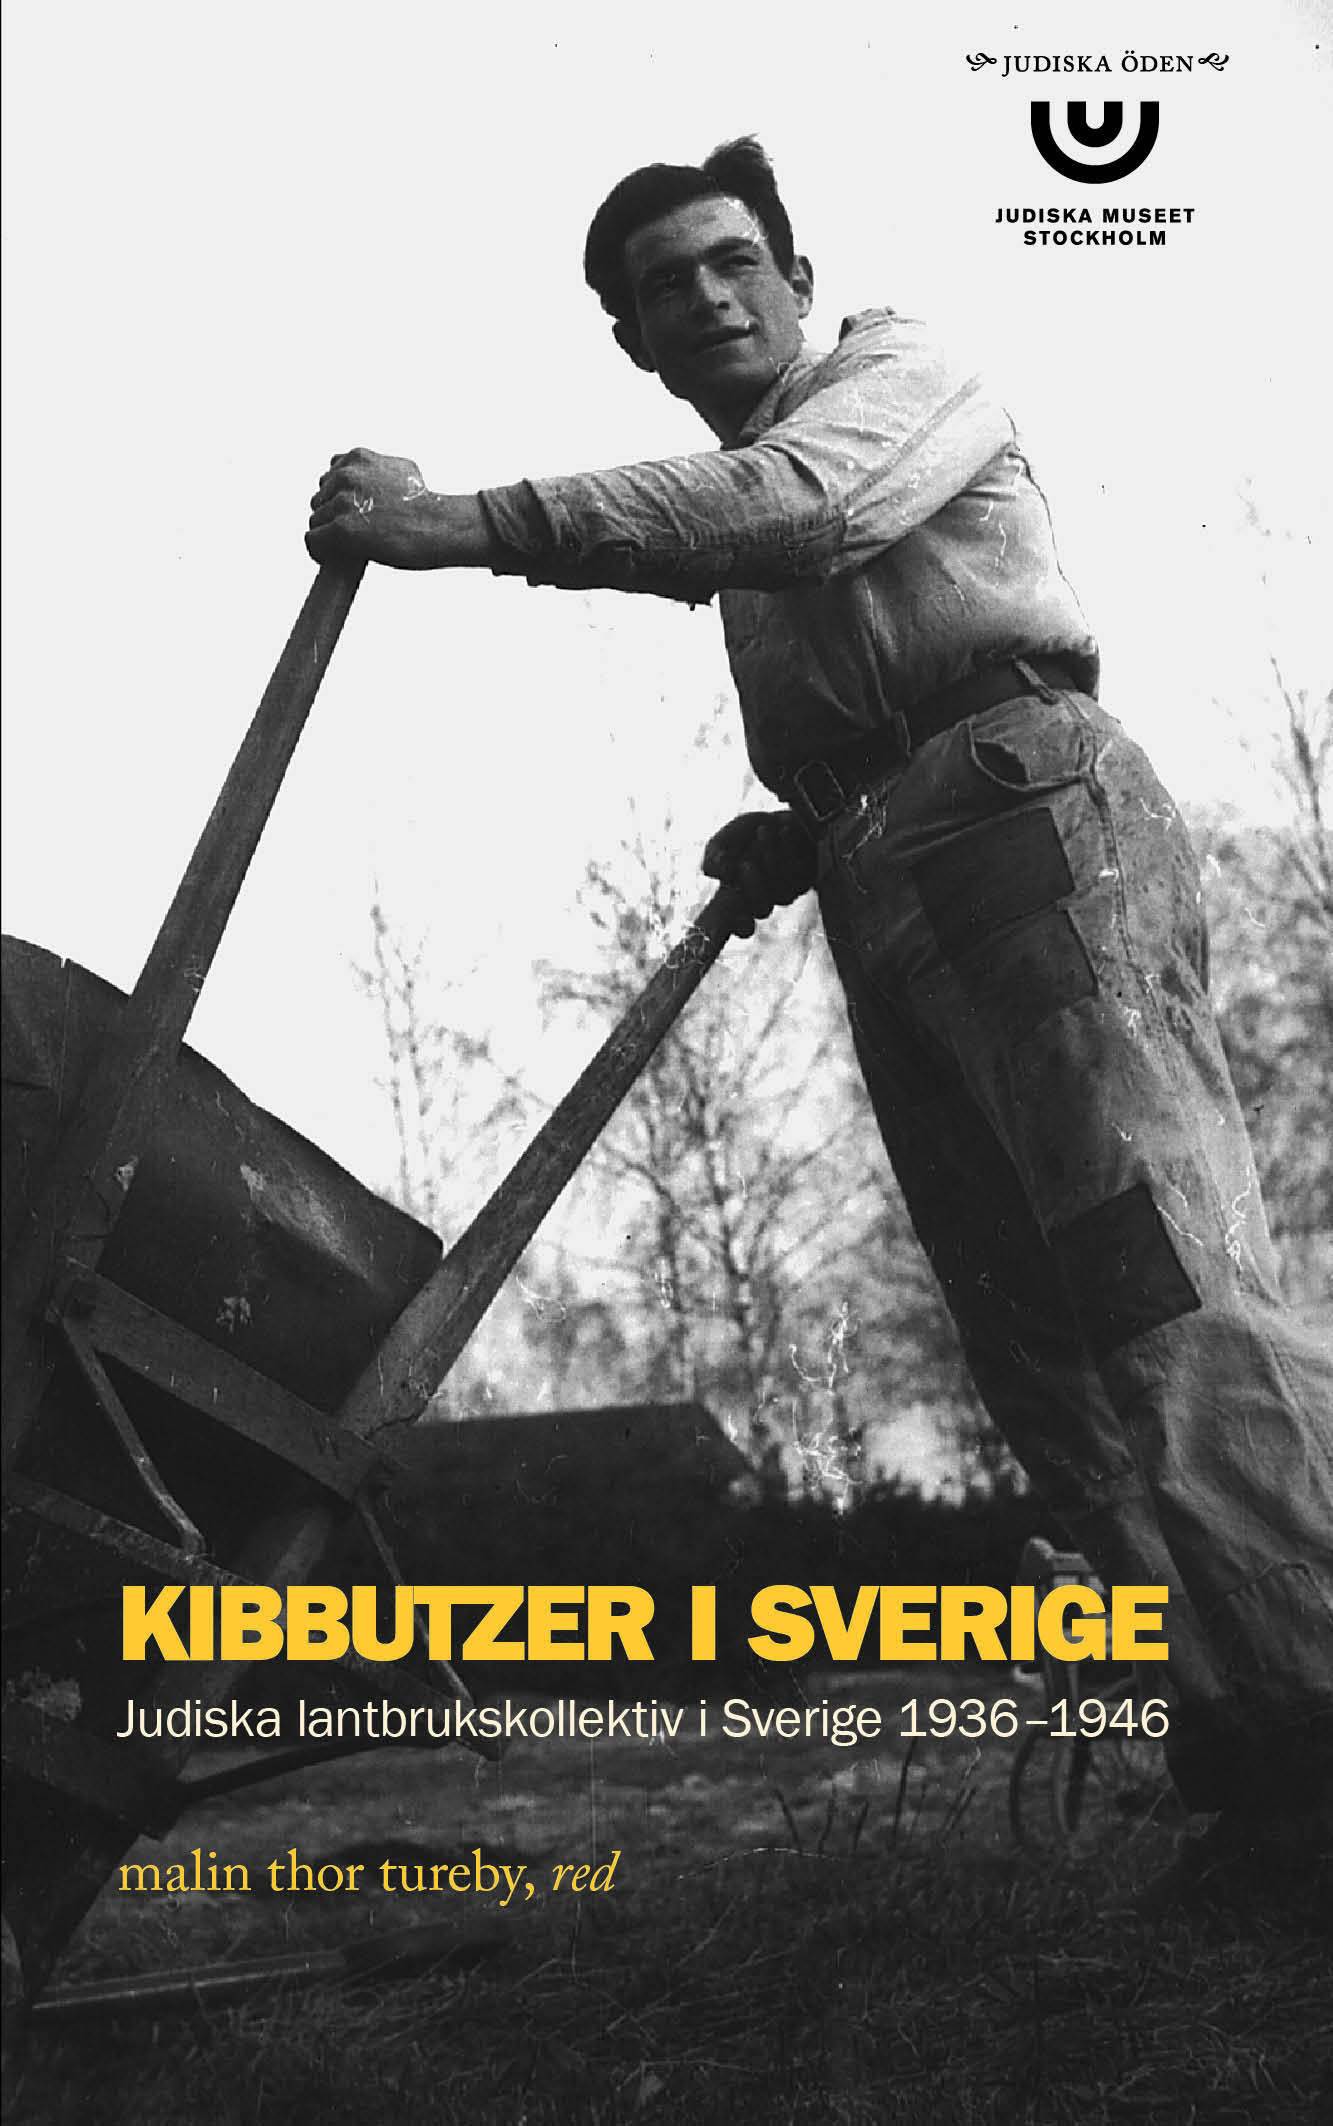 Kibbutzer i Sverige : Judiska lantbrukskollektiv i Sverige 1936-1946